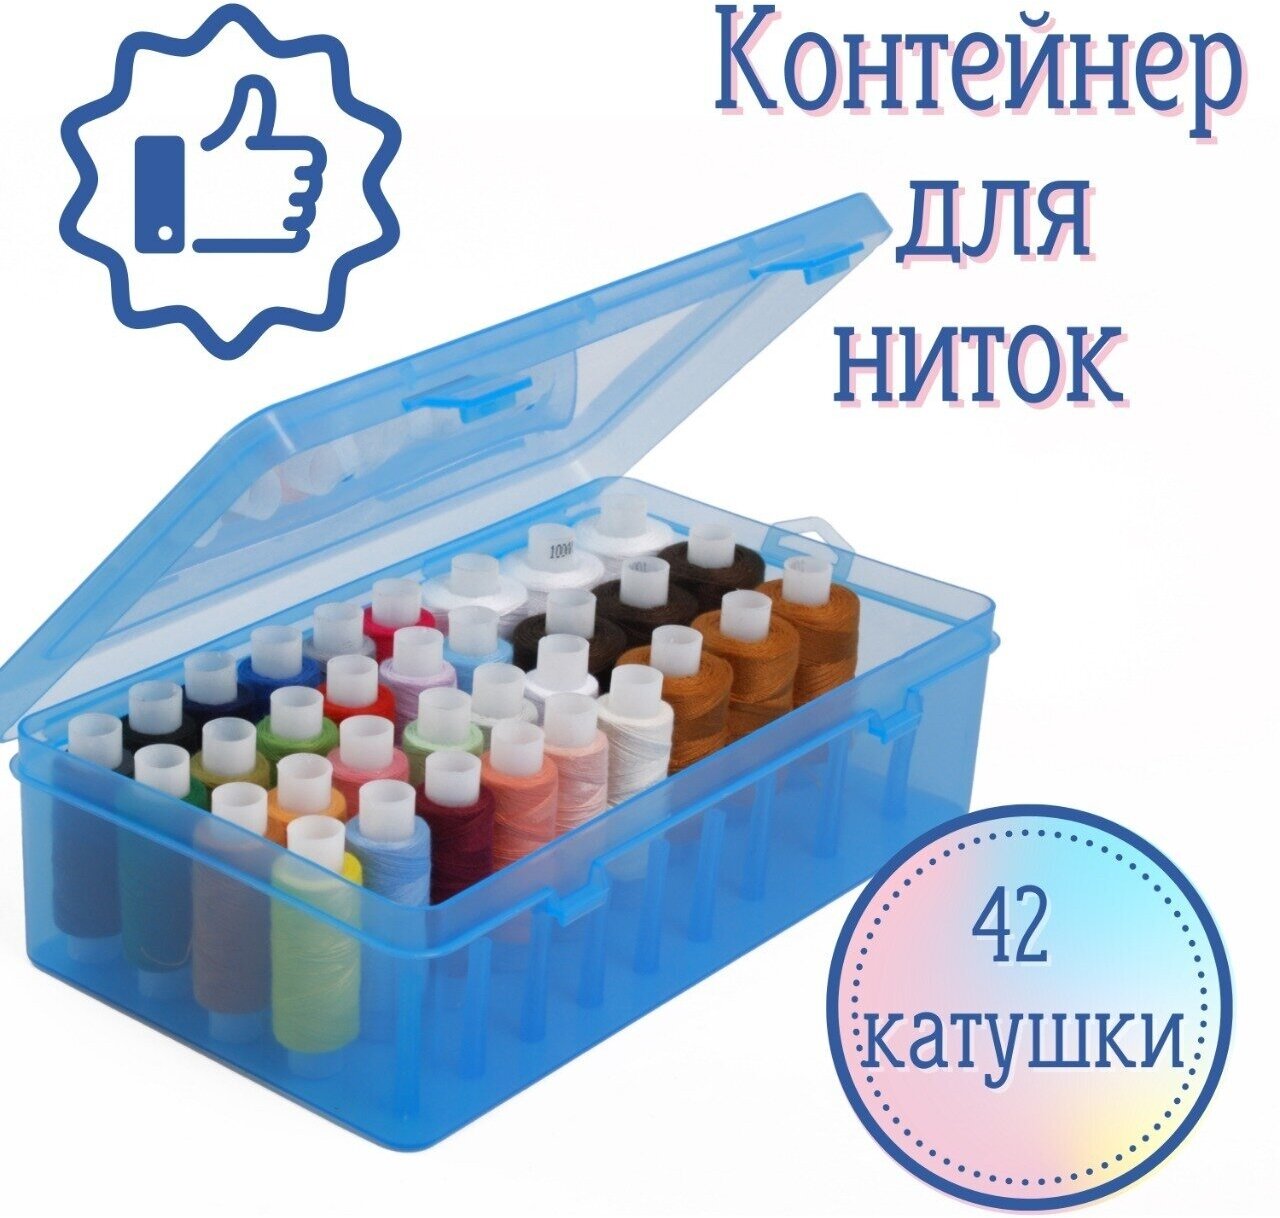 Органайзер / контейнер для хранения ниток 42 катушки / коробка 23.5х13.5х6 см, голубой